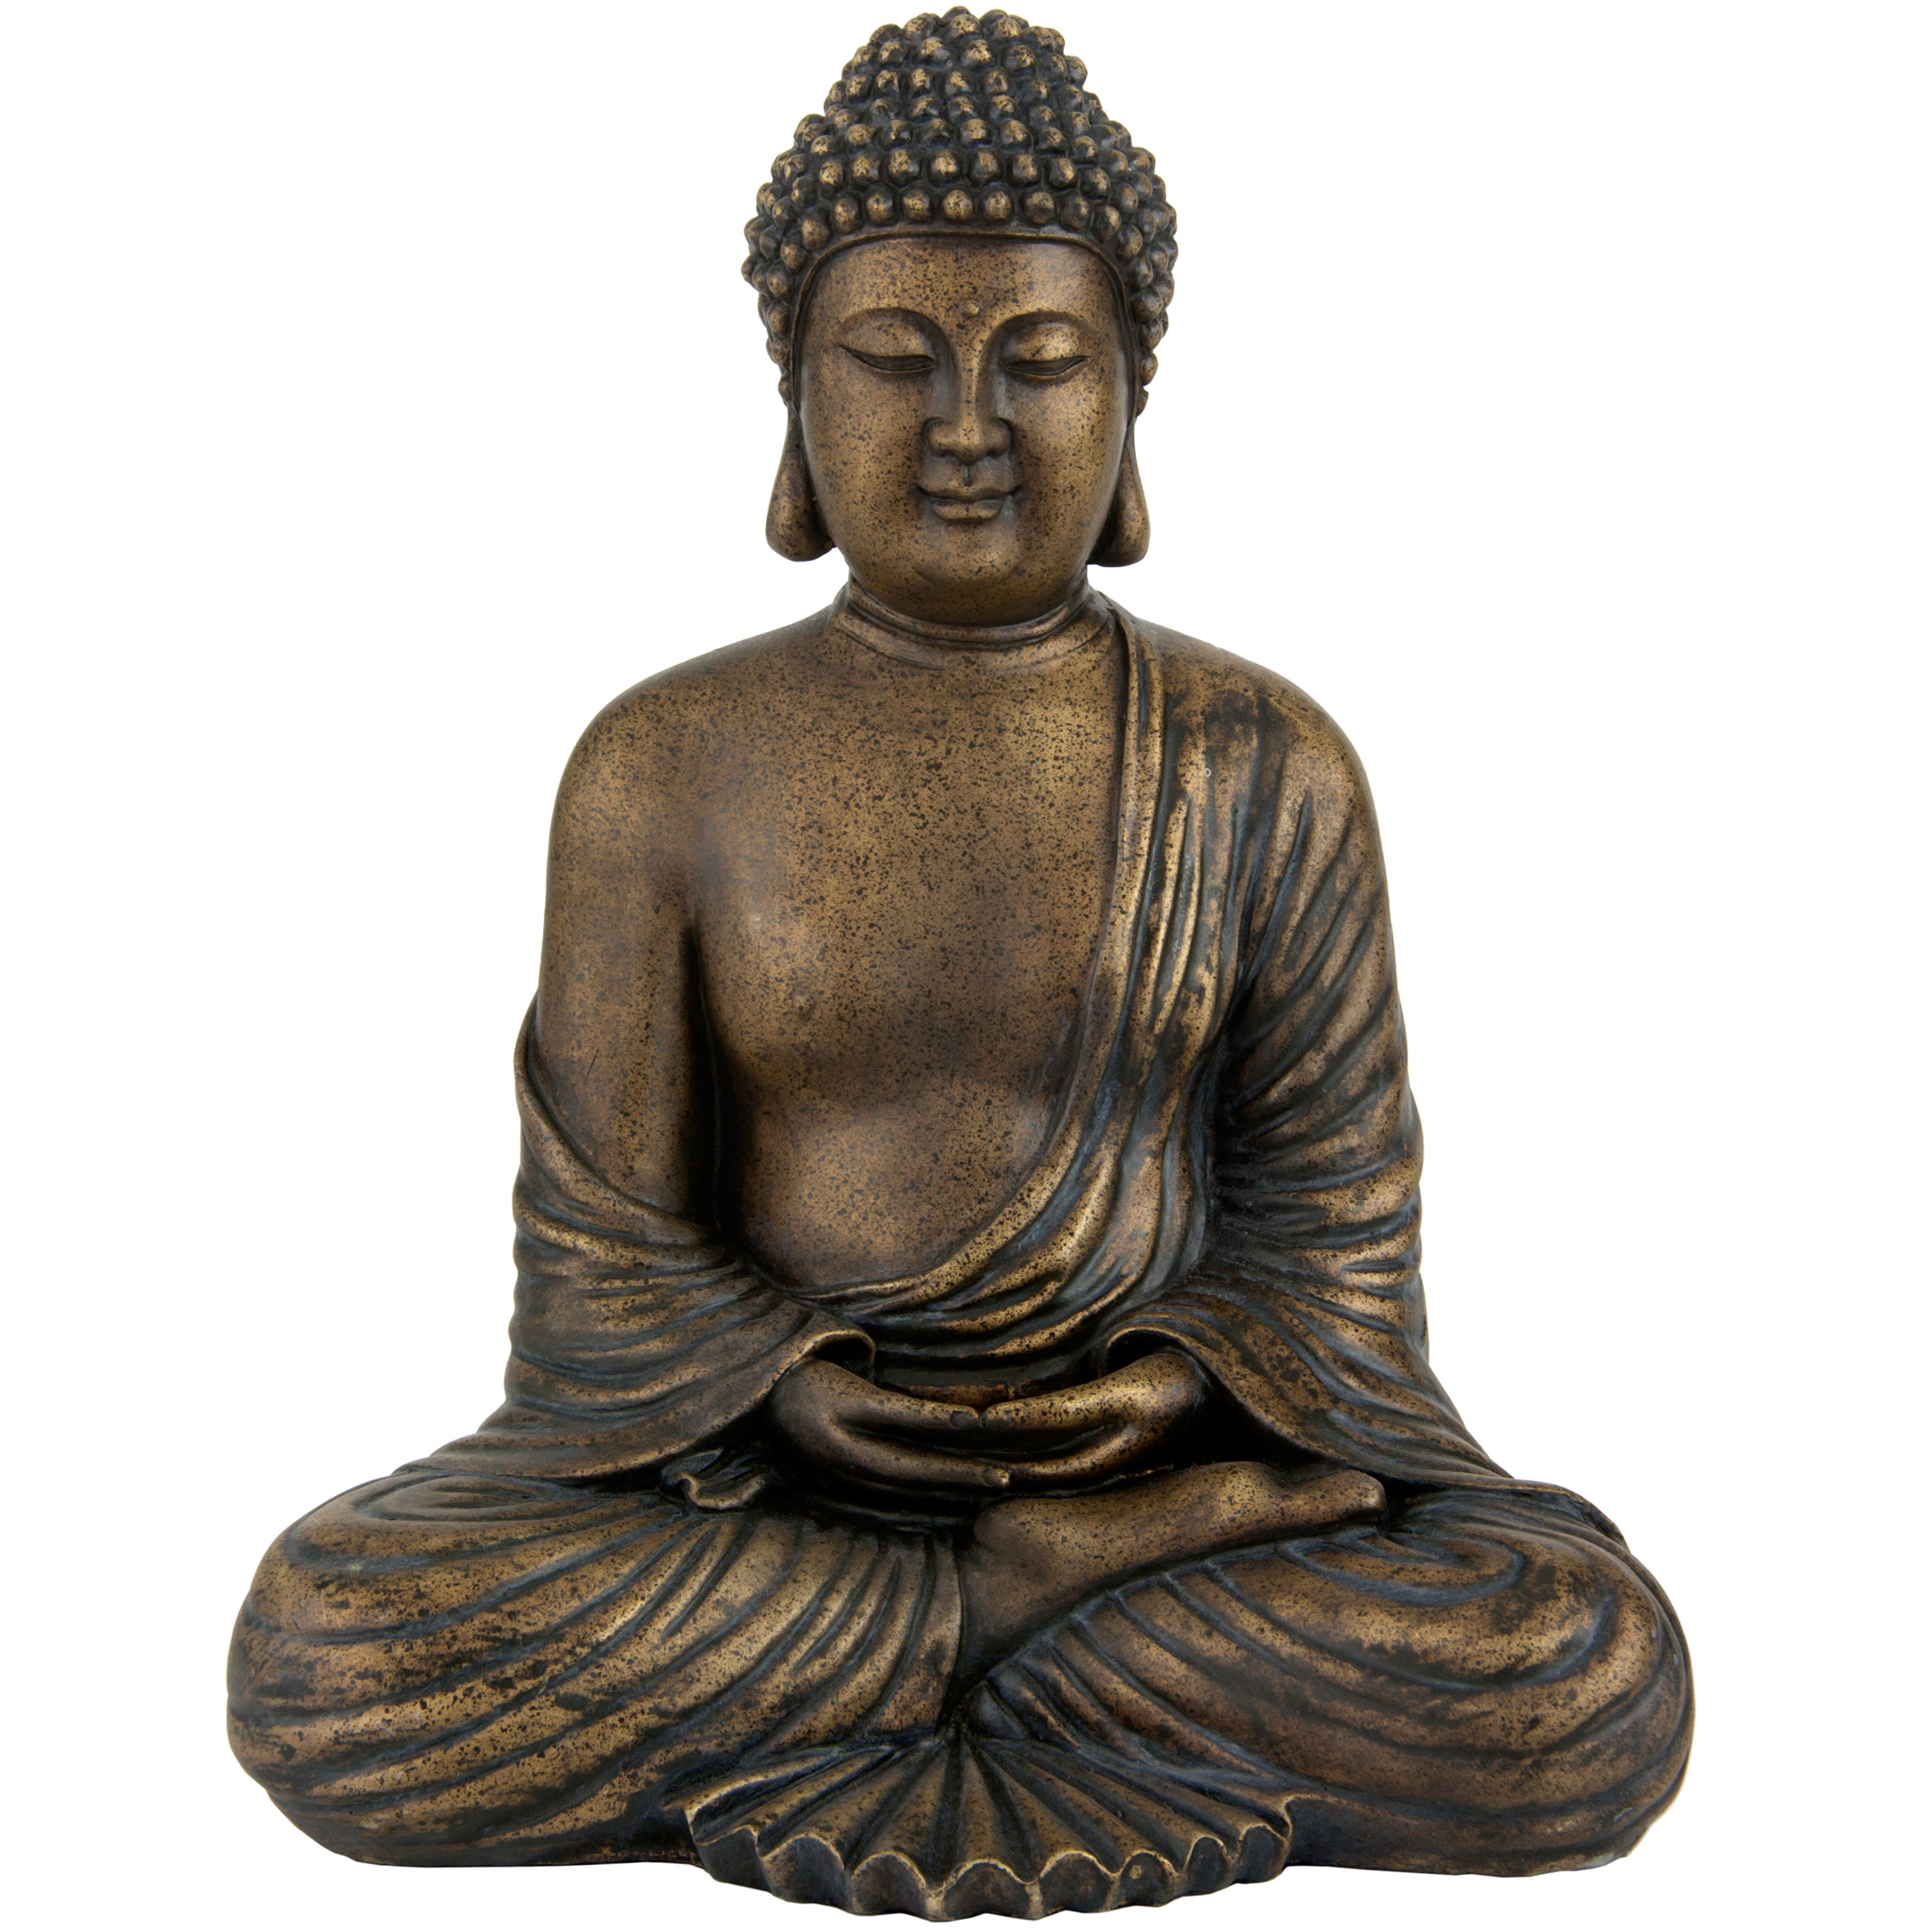 buy-12-japanese-meditating-buddha-statue-online-sta-bud43